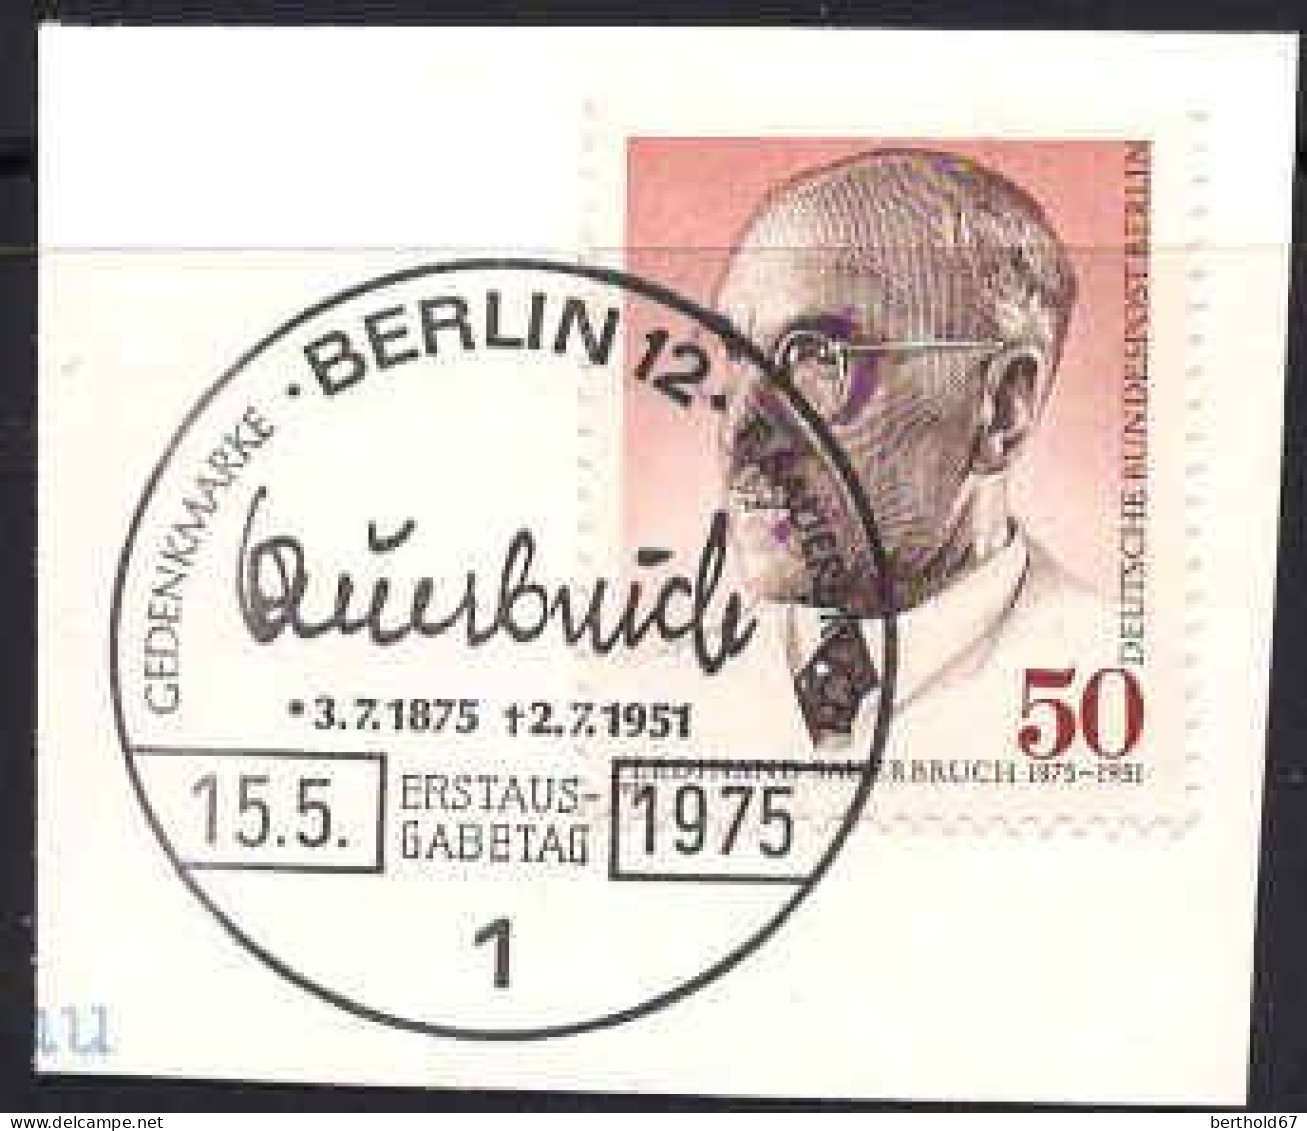 Berlin Poste Obl Yv:456 Mi:492 Ferdinand Sauerbruch Chirurgien (TB Cachet à Date) Sur Fragment - Used Stamps